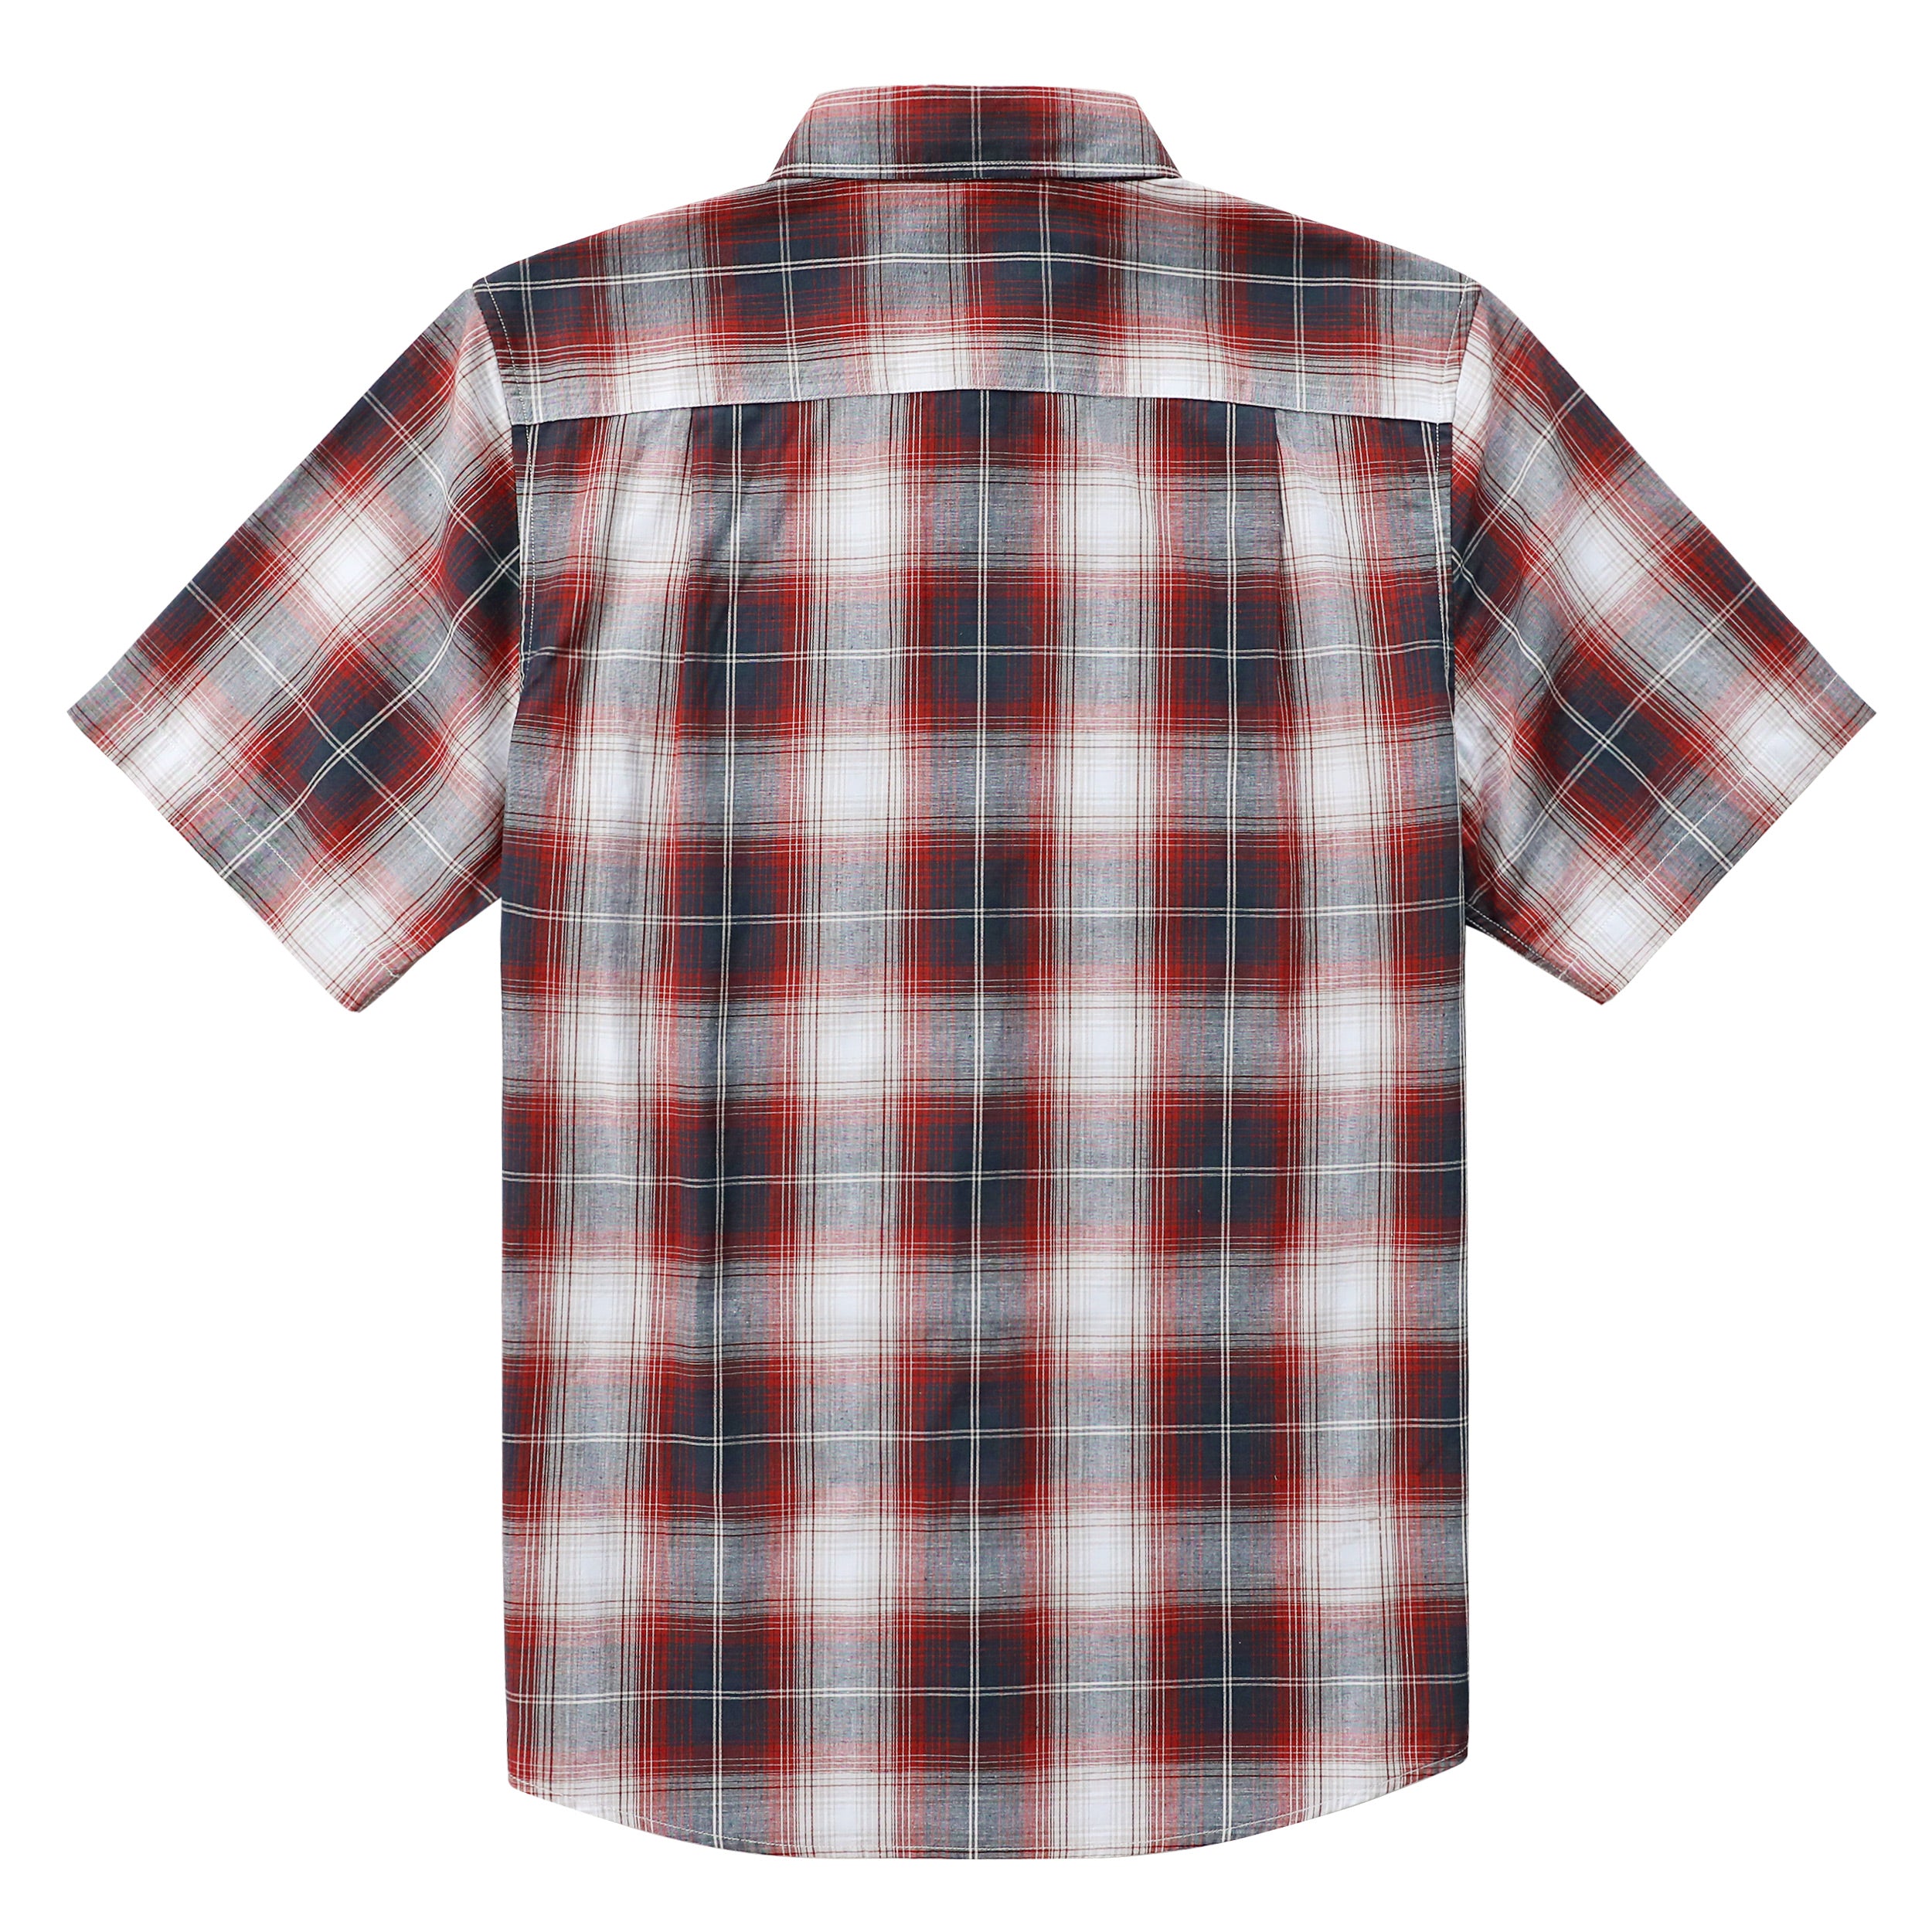 Dubinik® Mens Short Sleeve Button Down Shirts 100% Cotton Plaid Casual Shirt with Pocket #0110